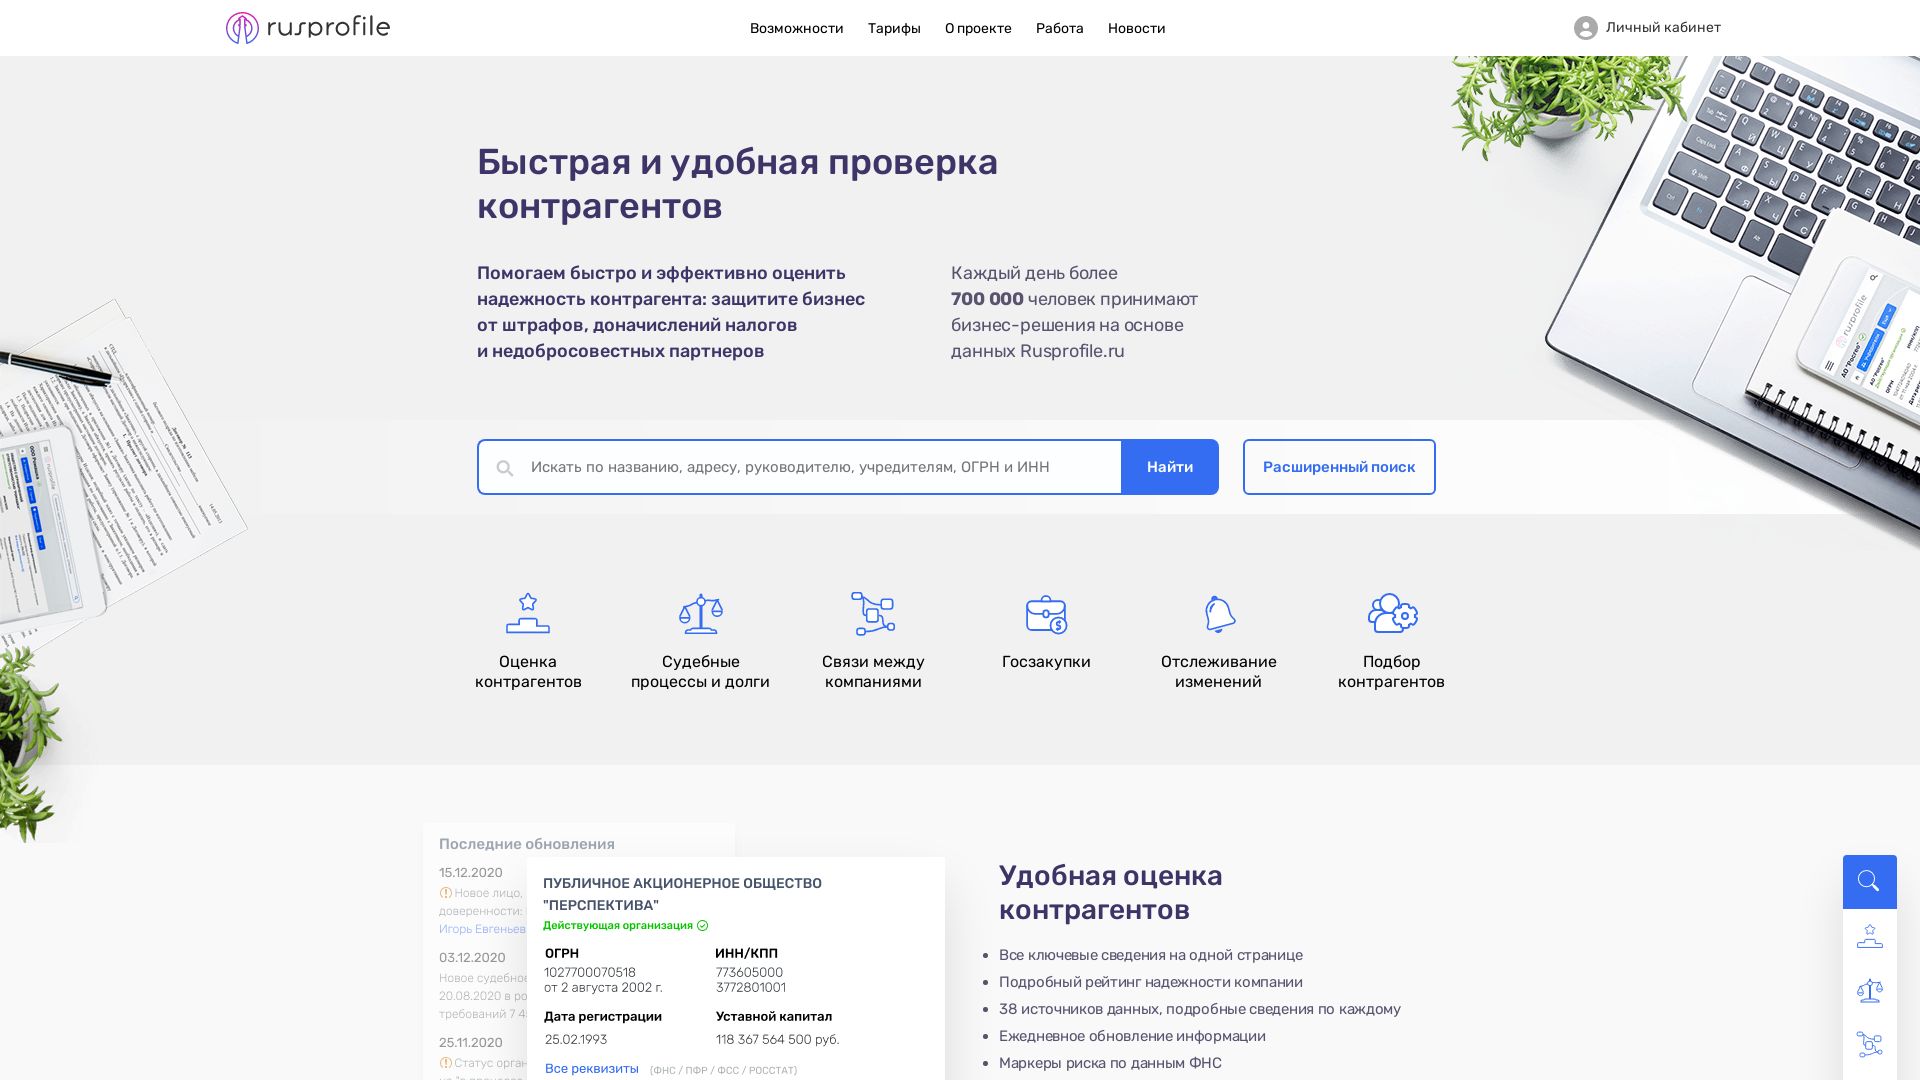 вебсайт rusprofile.ru Є   ONLINE